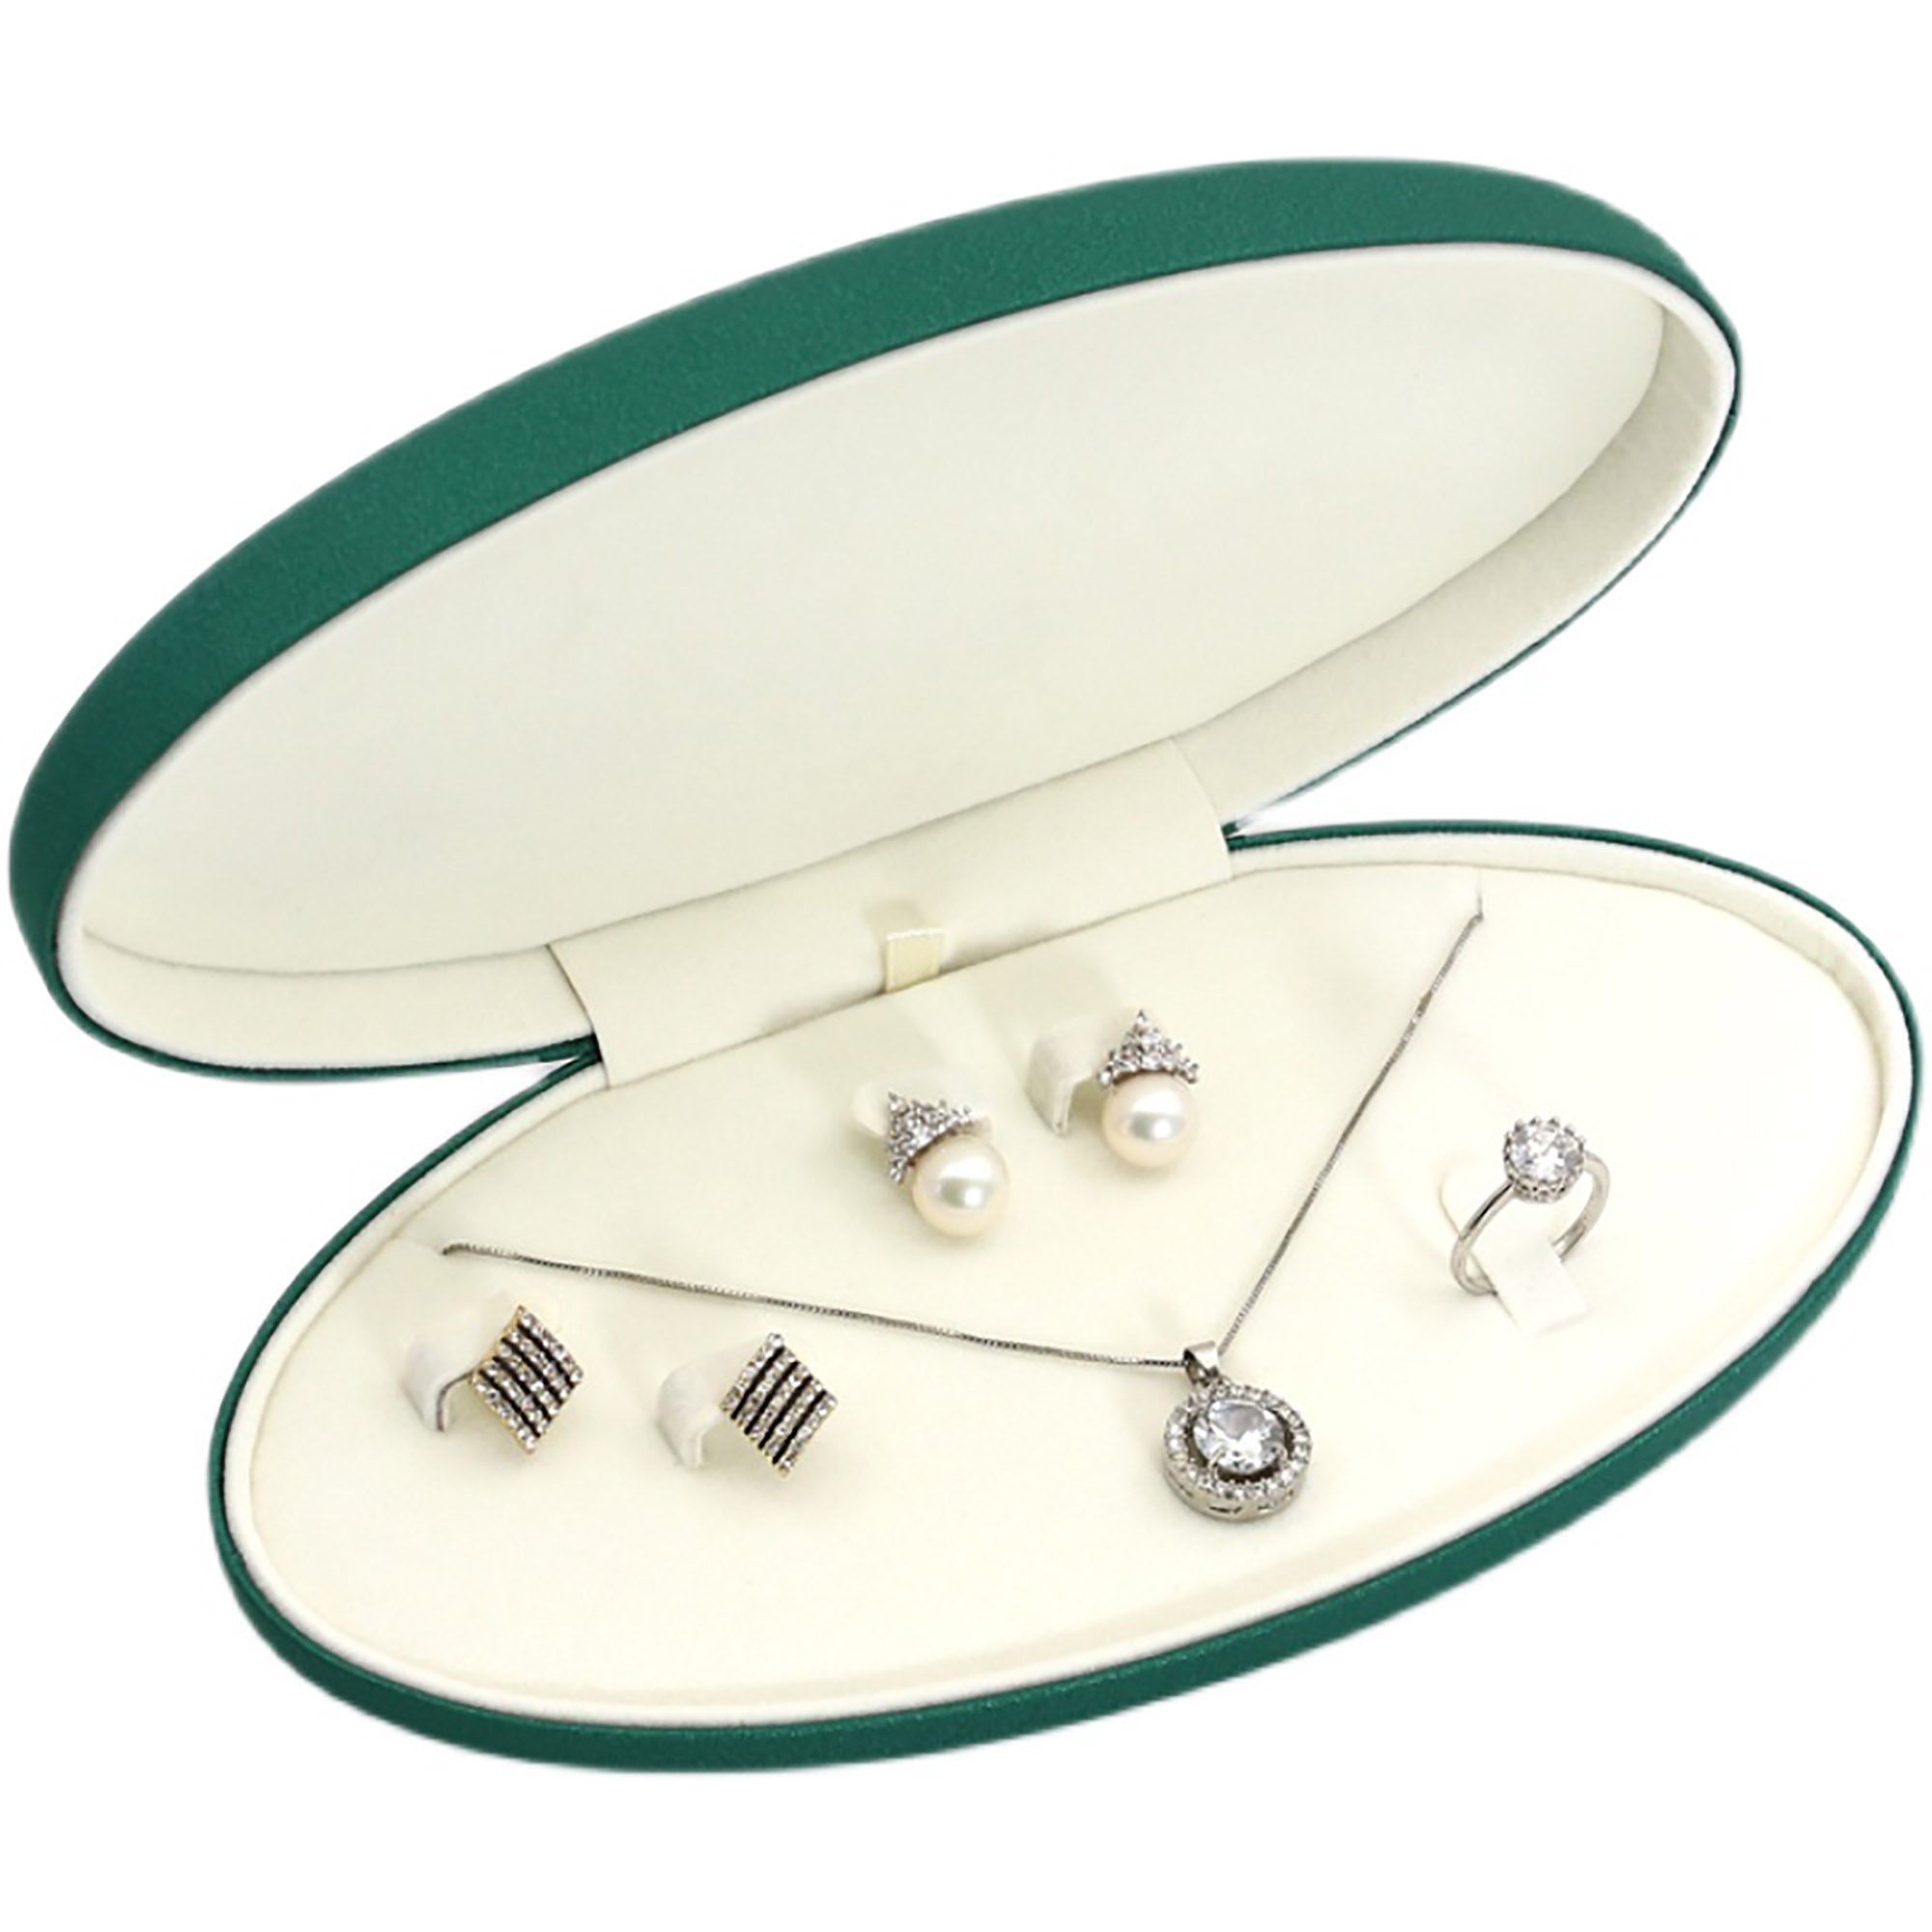 Oval Velvet Jewelry Box / Gift Box Vintage Gift Home Deco Decoration Design